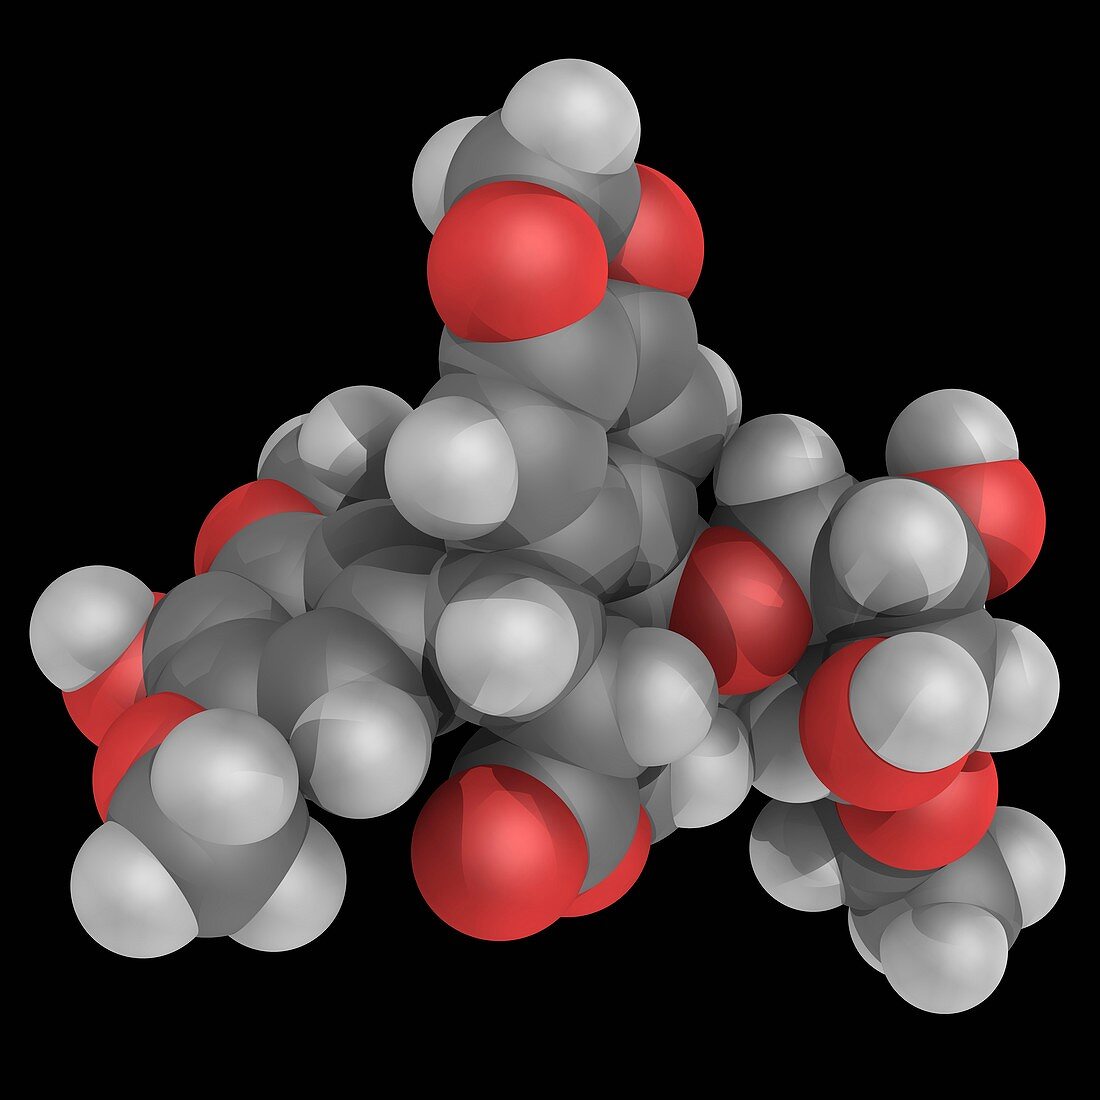 Etoposide drug molecule